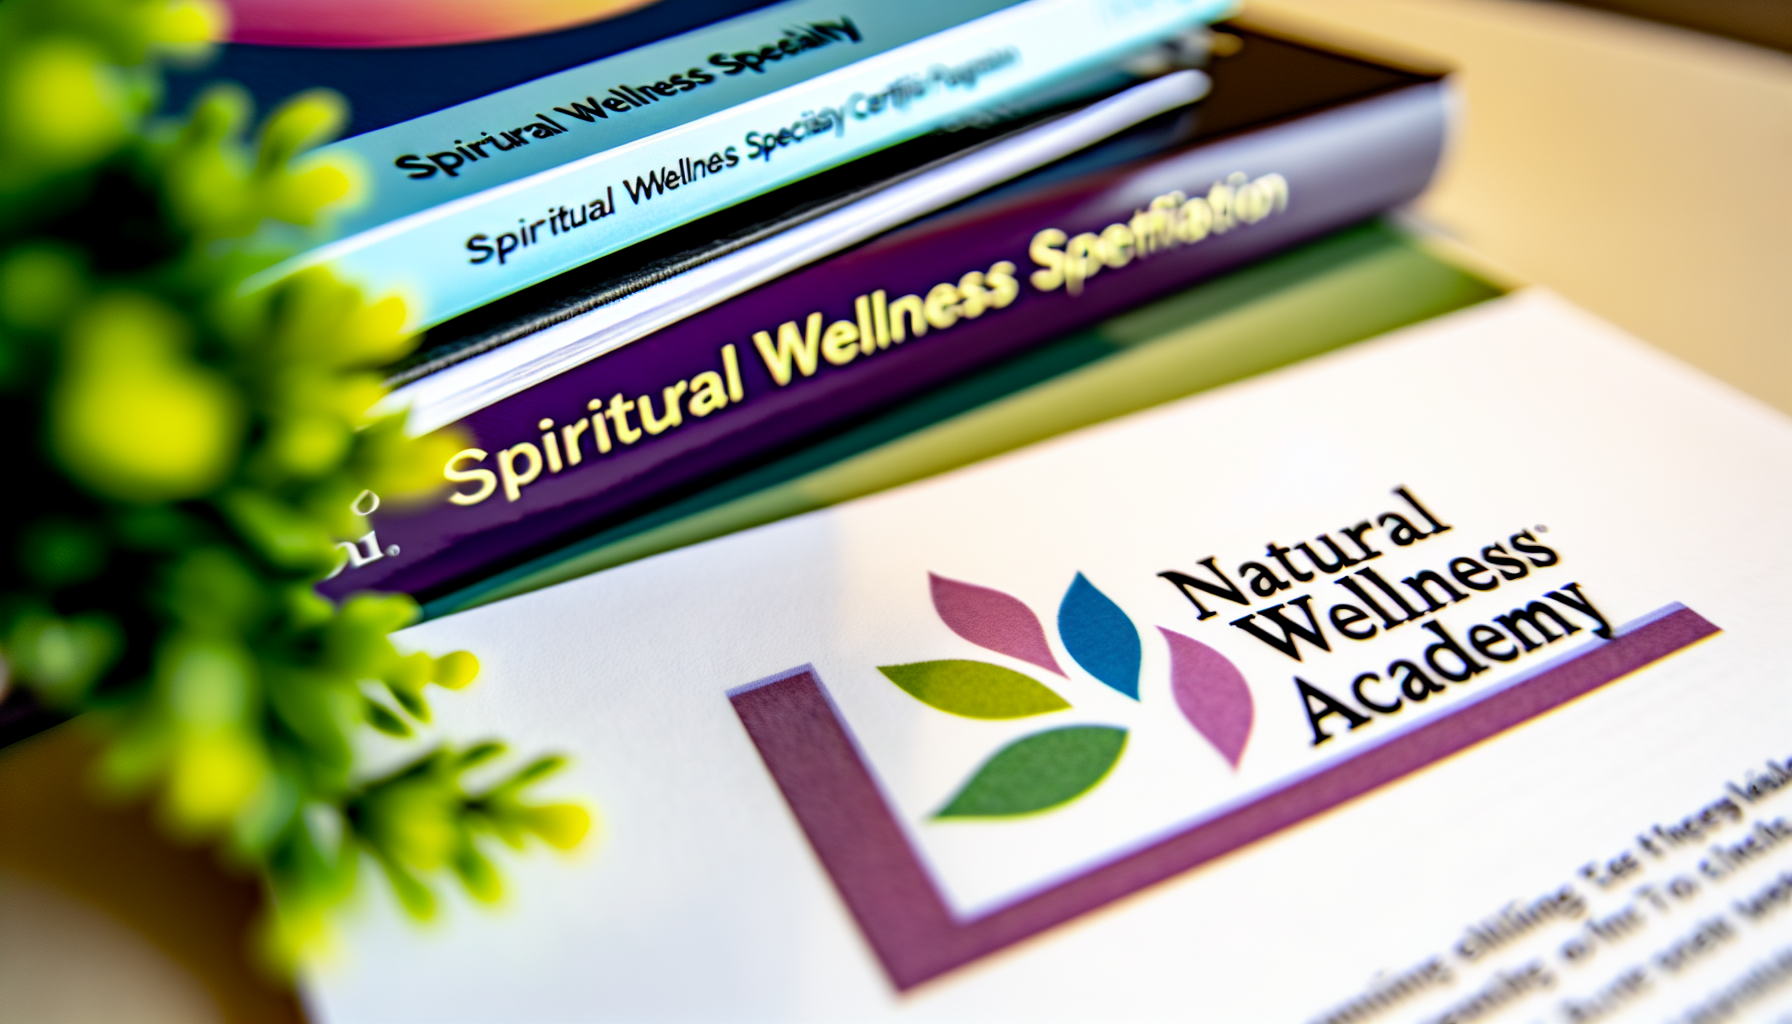 Natural Wellness Academy logo and certification program